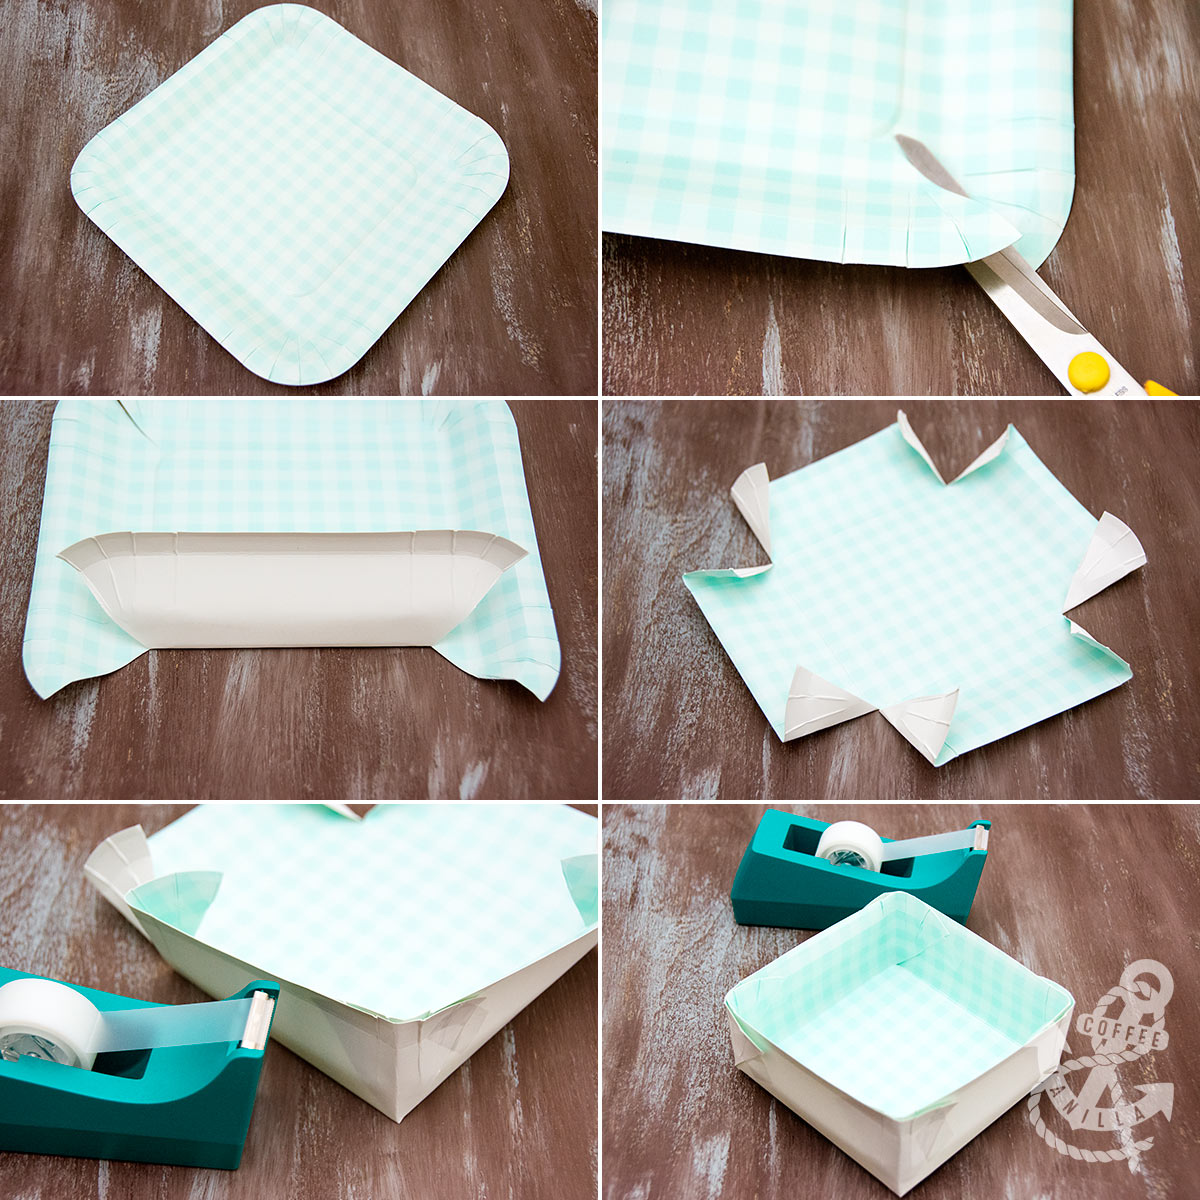 DIY Paper Plate Bake Sale Boxes » Coffee & Vanilla